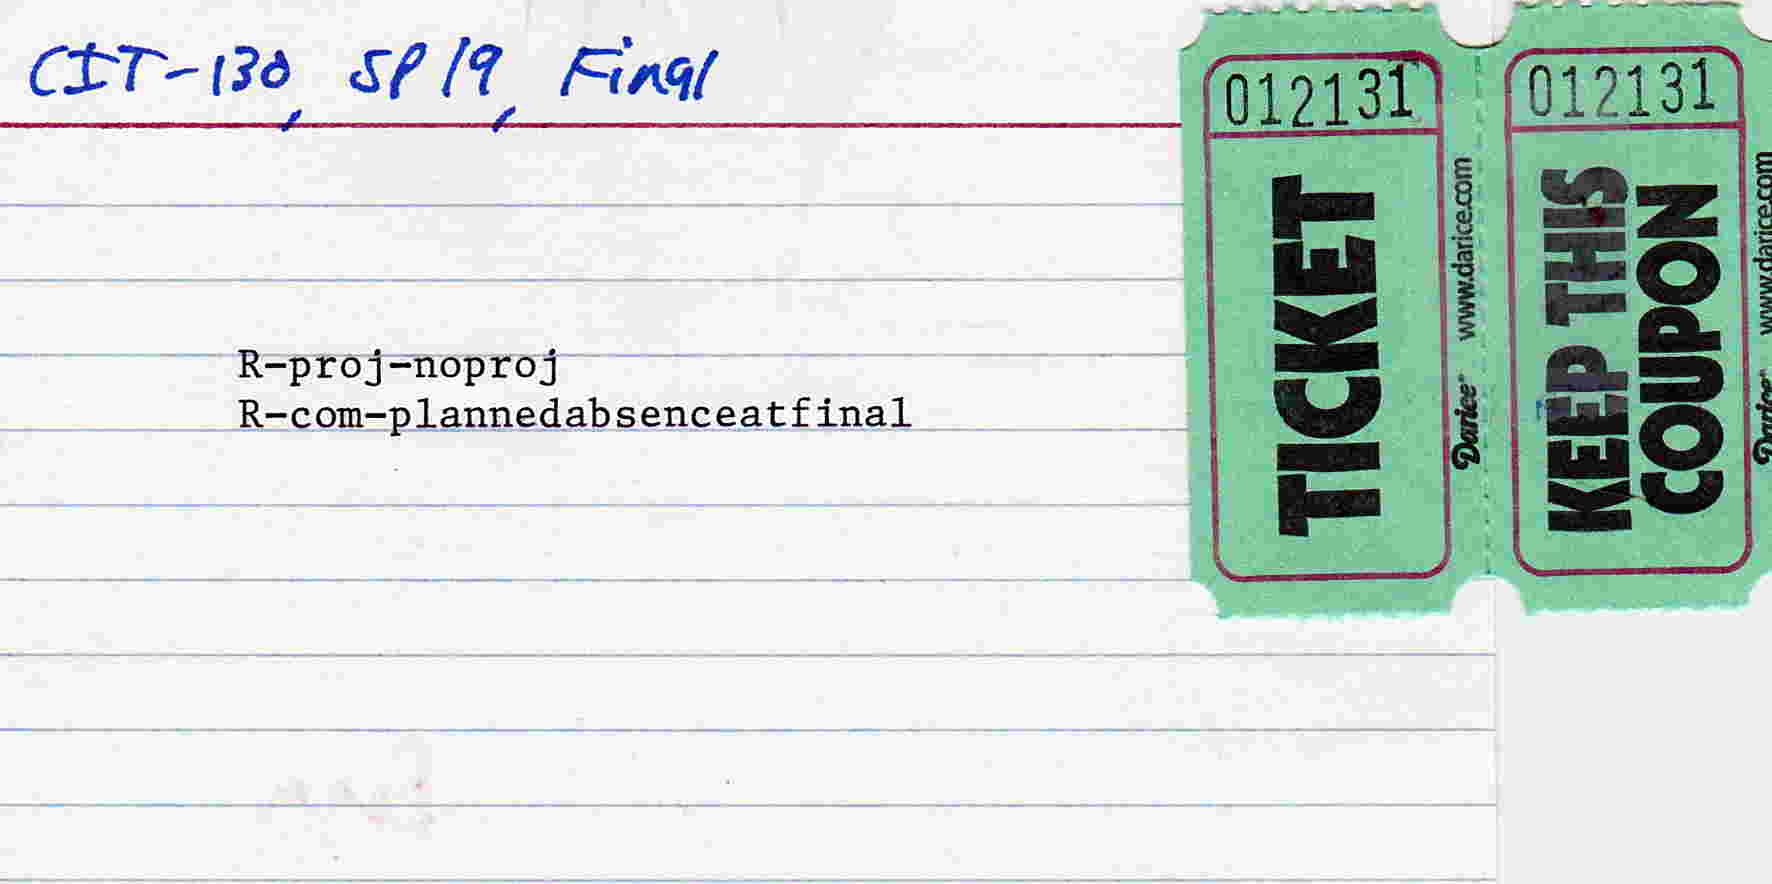 final letter grade proposal card SP19